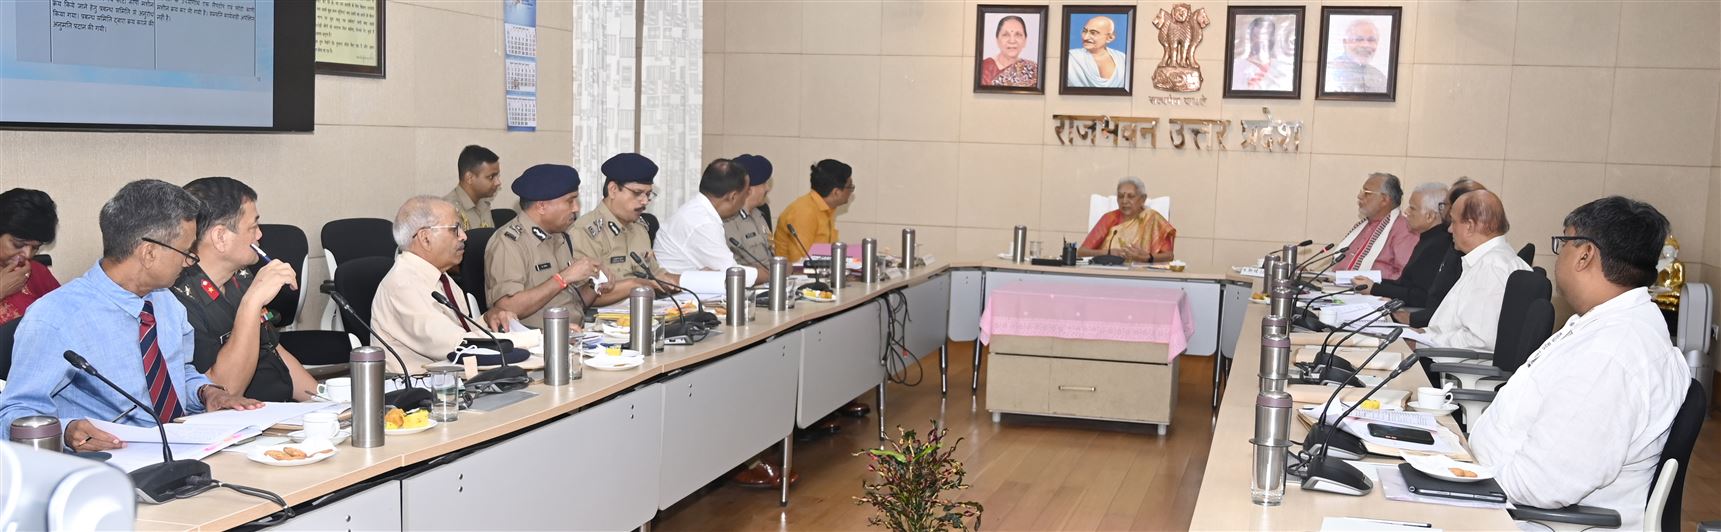 The meeting of the Managing Committee of Uttar Pradesh Police &amp; Armed Forces Sahayata Sansthan, Lucknow held under the chairpersonship of the Governor./ राज्यपाल की अध्यक्षता में उ0प्र0 पुलिस आर्म्ड फोर्सेज सहायता संस्थान, लखनऊ प्रबंध समिति की बैठक सम्पन्न।  